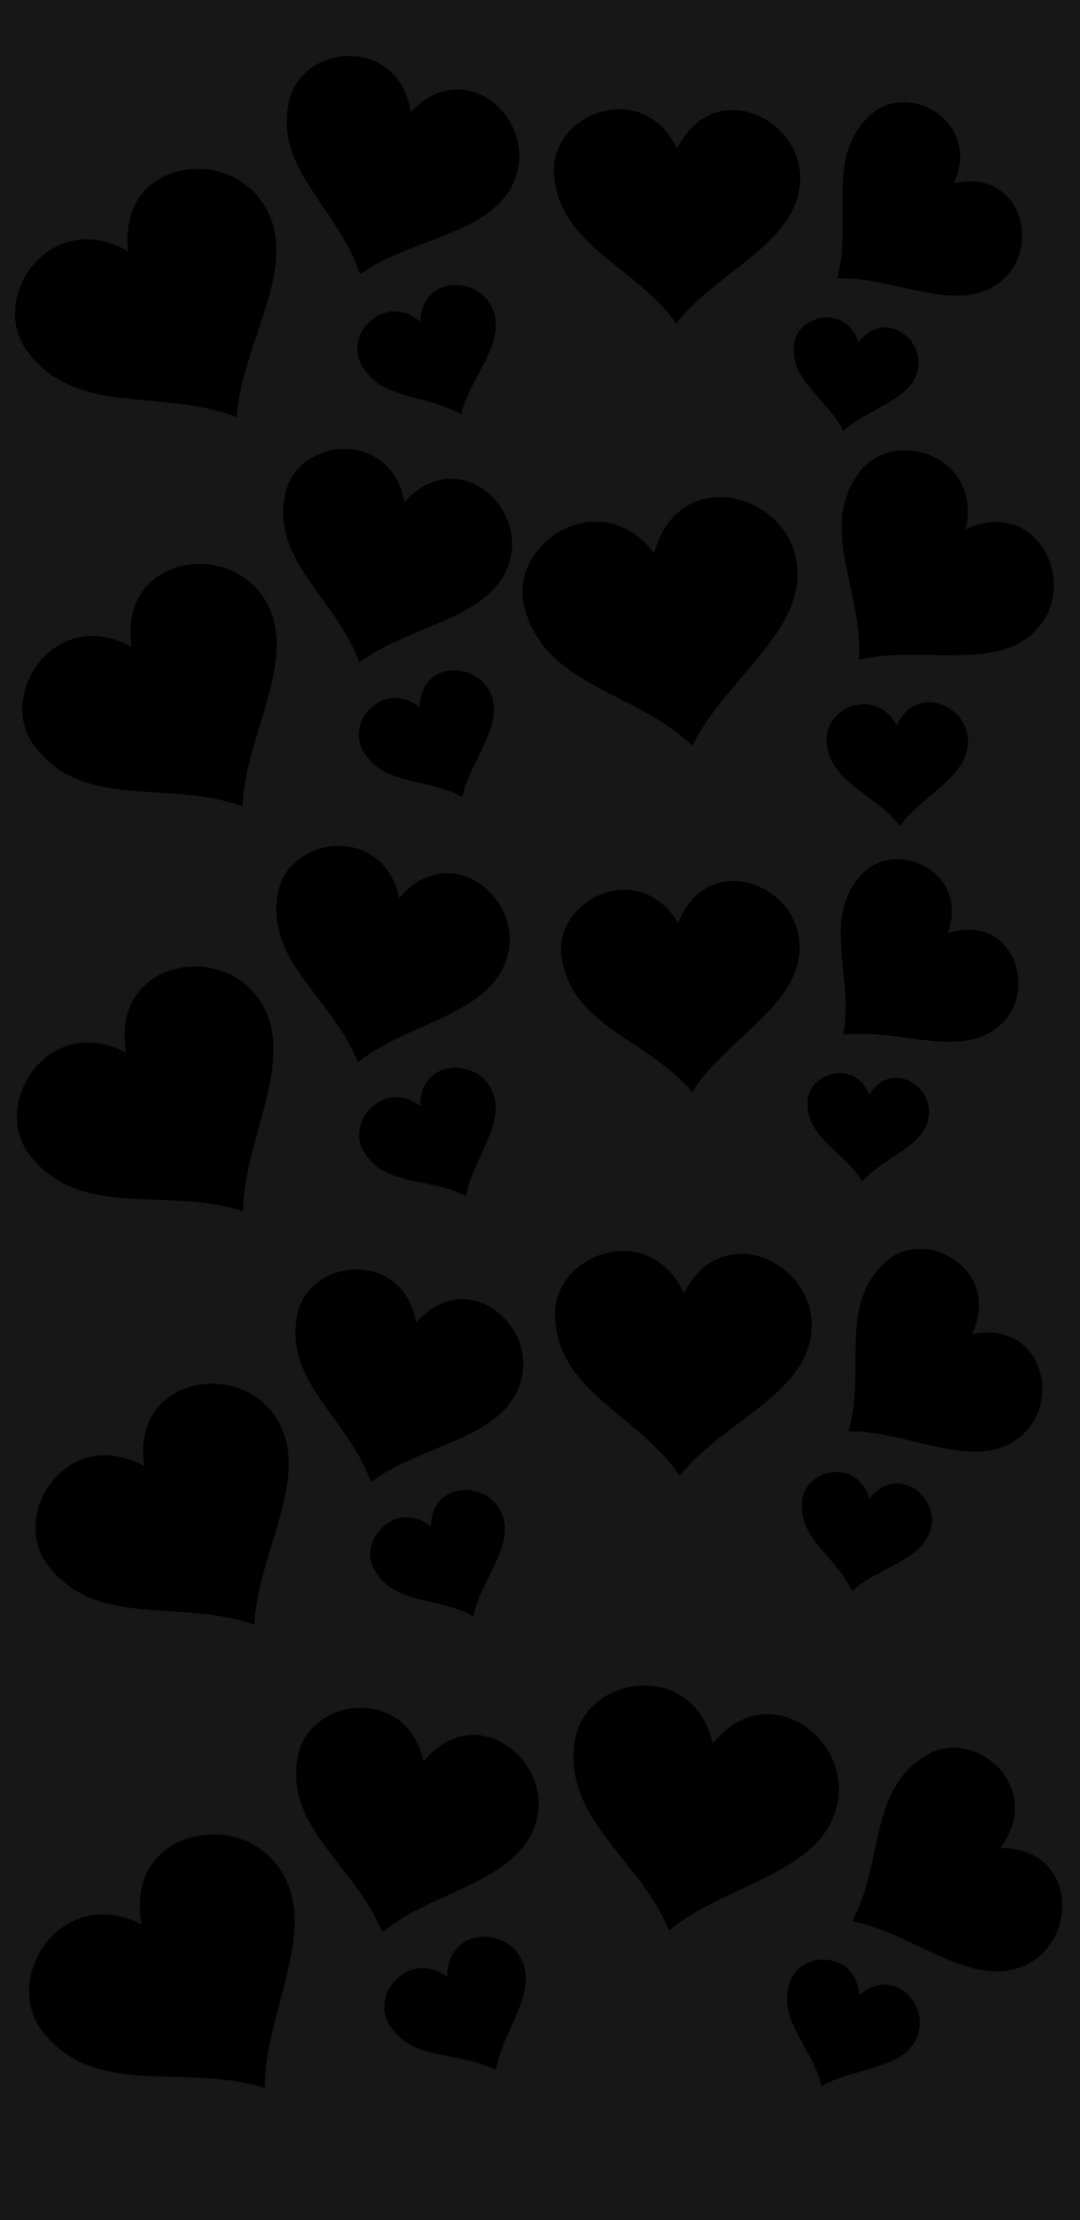 Black hearts background by Angelabunny666 on DeviantArt